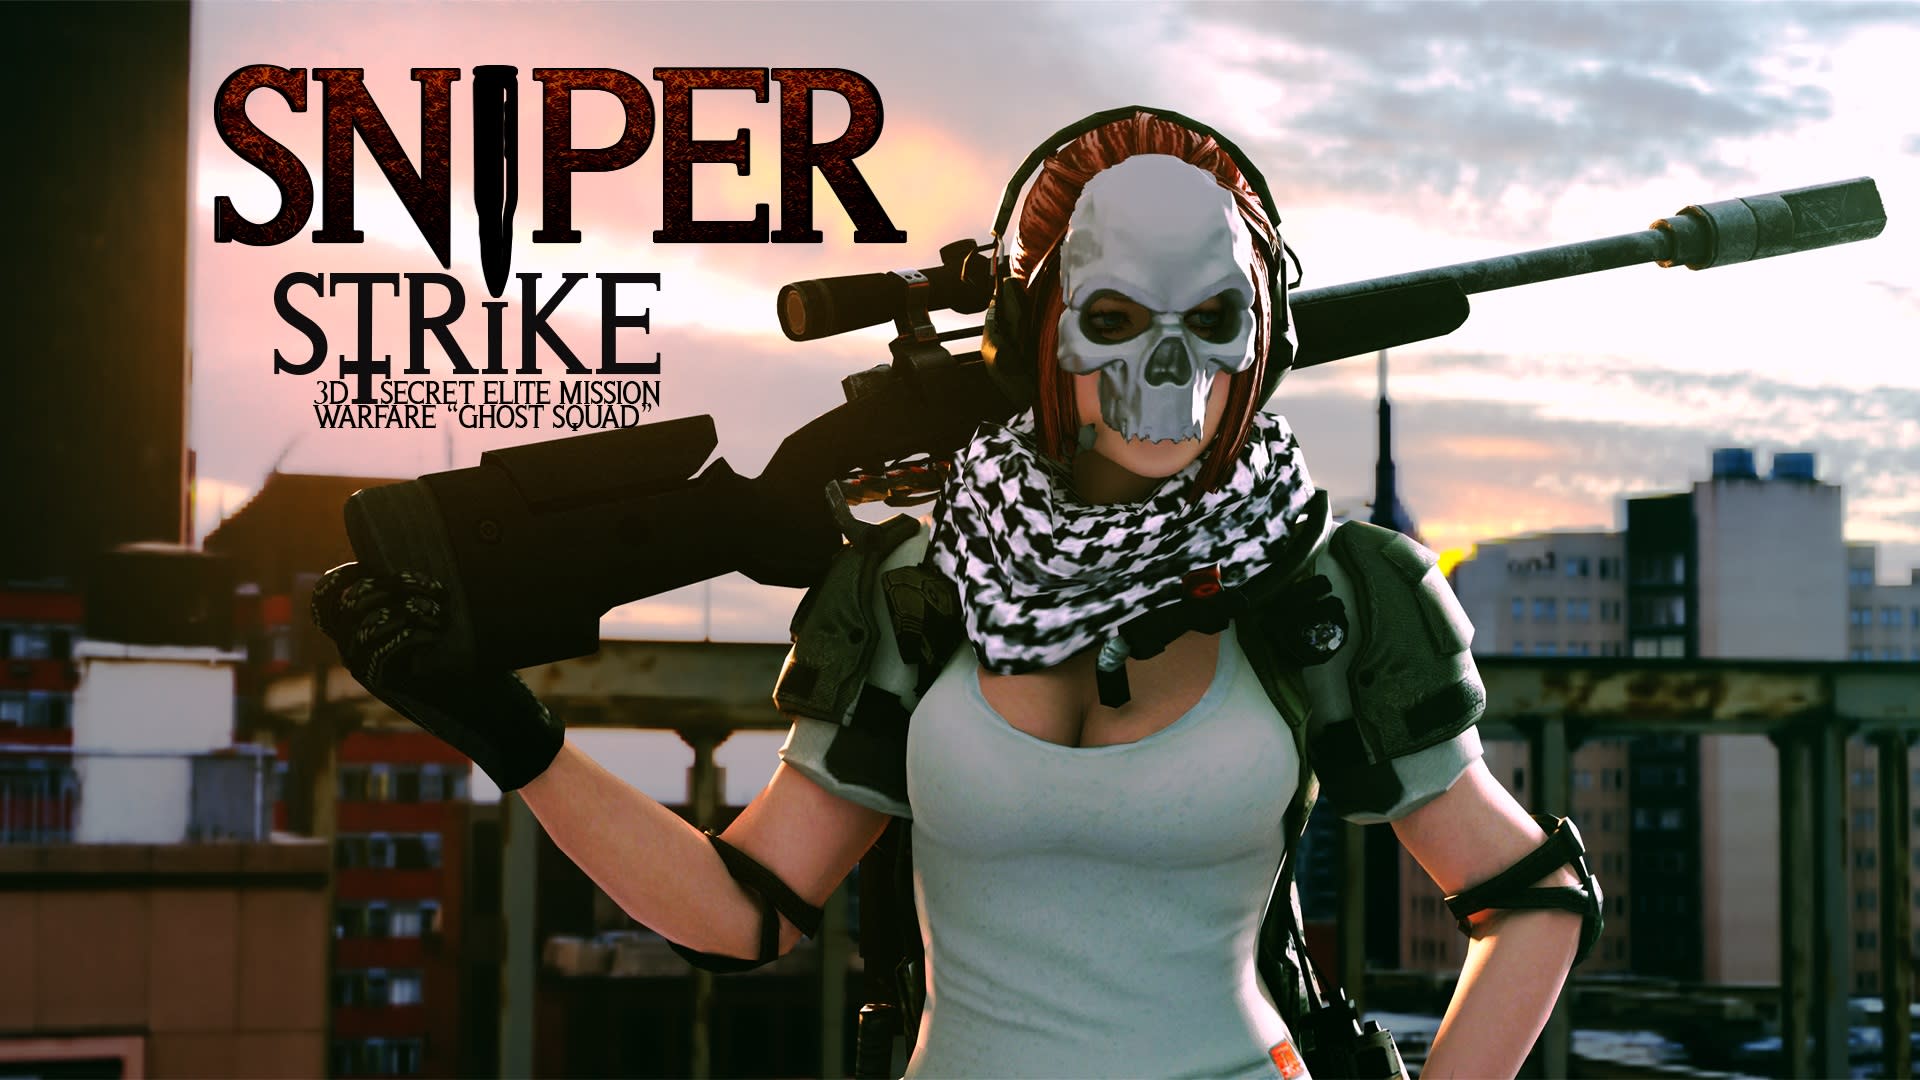 Sniper Strike 3D -  Secret elite mission warfare "GHOST SQUAD" 1